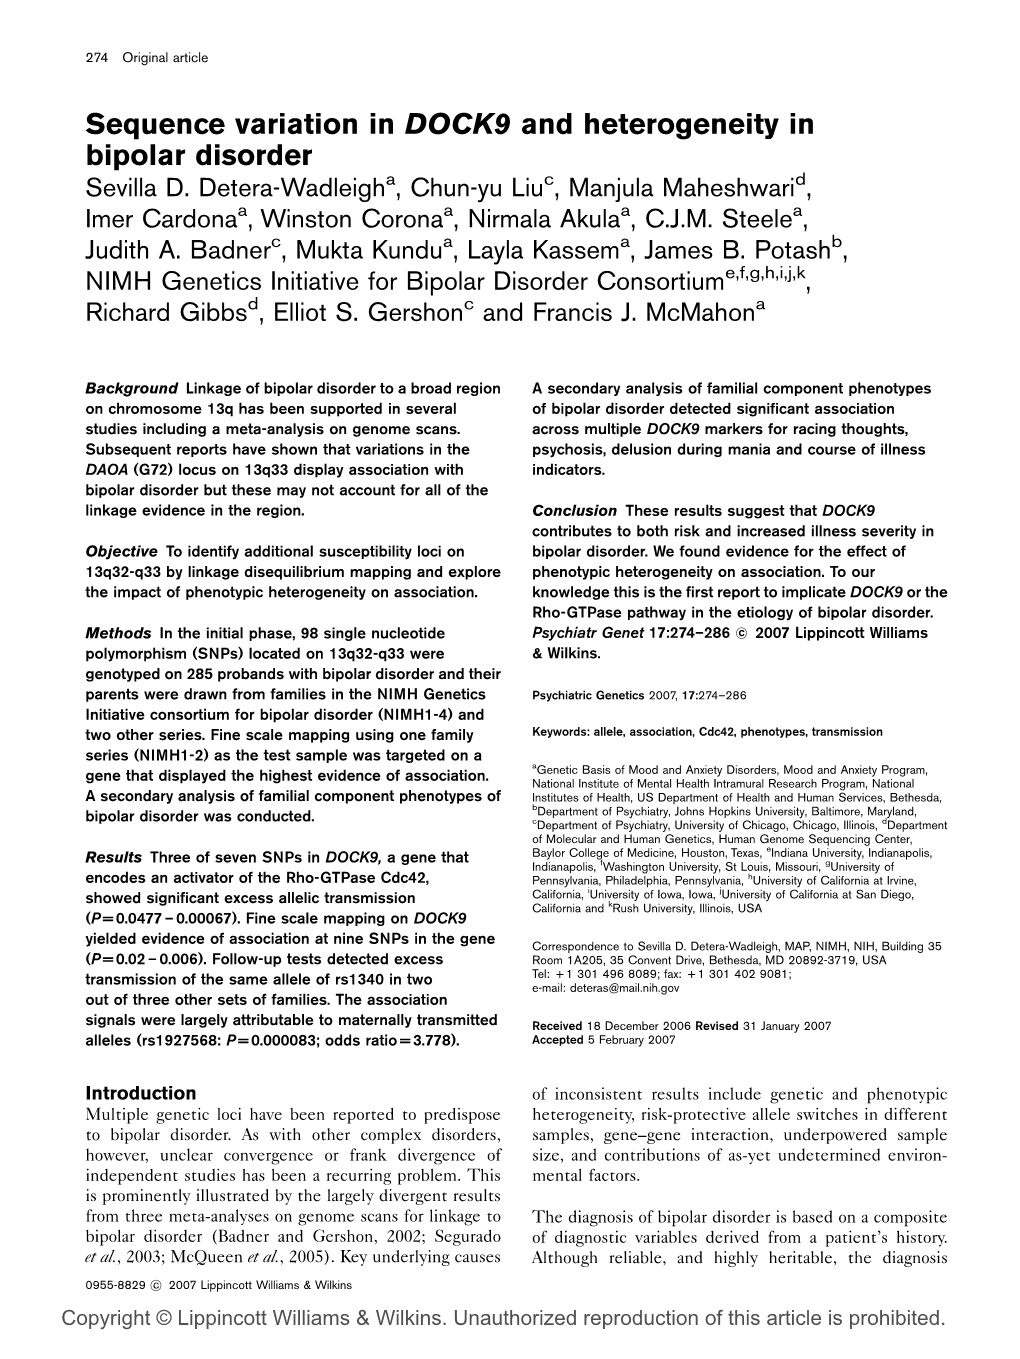 Sequence Variation in DOCK9 and Heterogeneity in Bipolar Disorder Sevilla D